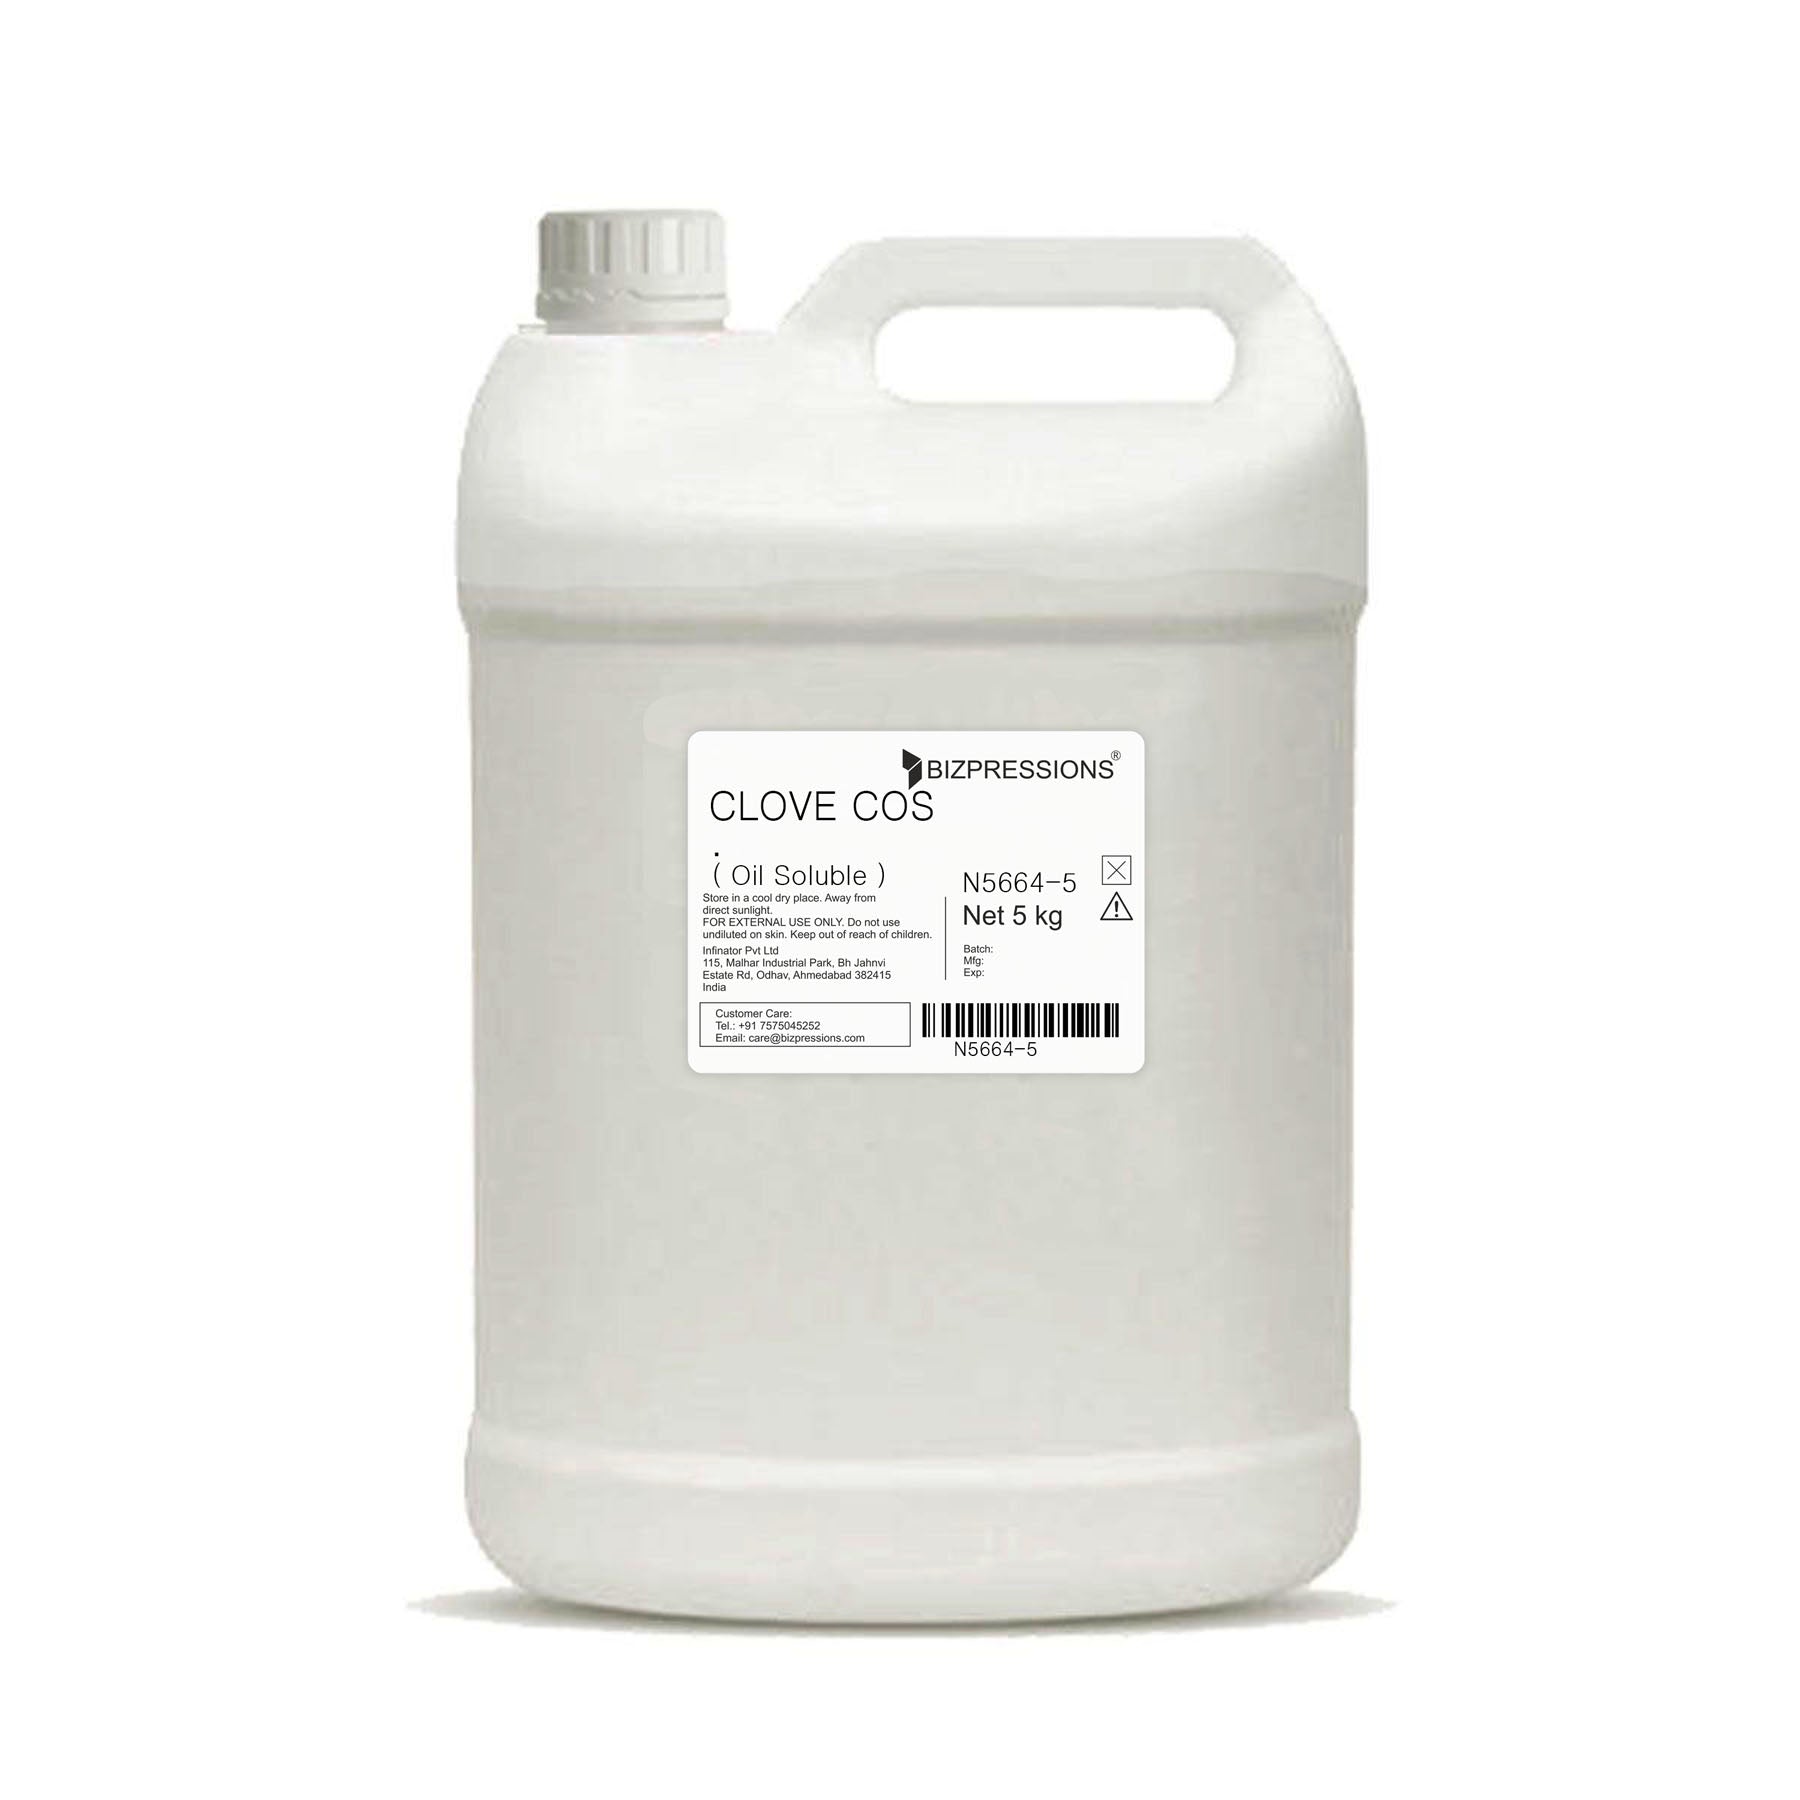 CLOVE COS - Fragrance ( Oil Soluble ) - 5 kg